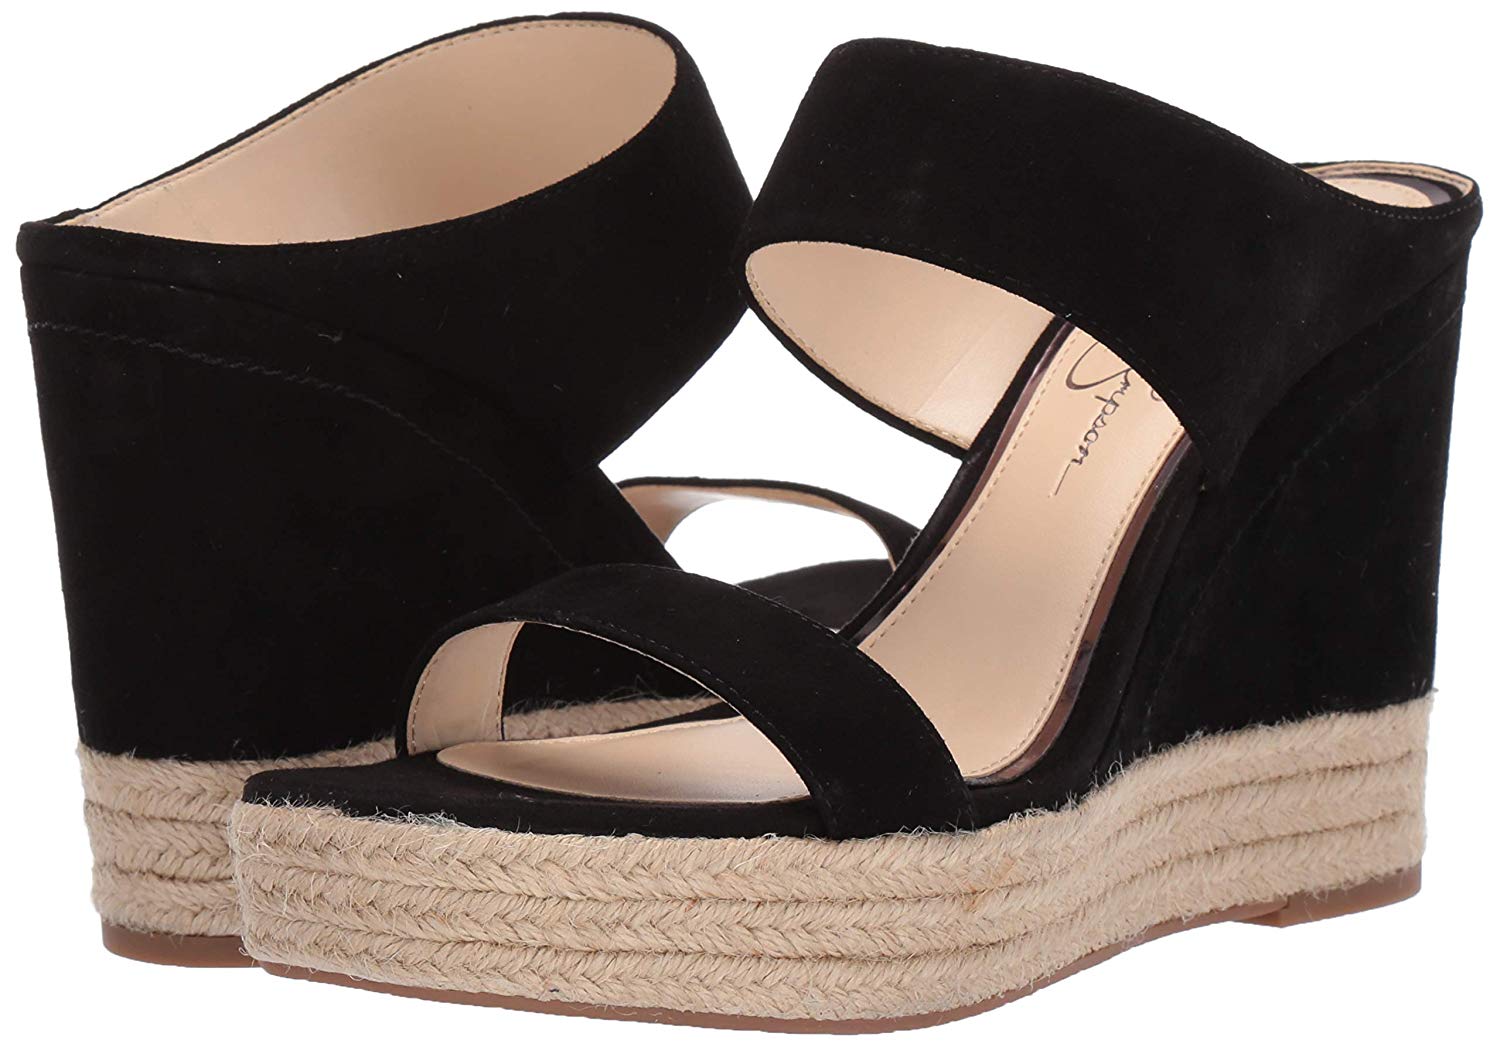 Jessica Simpson Siera Women's Sandal, Black, Size 9.5 q5eu | eBay